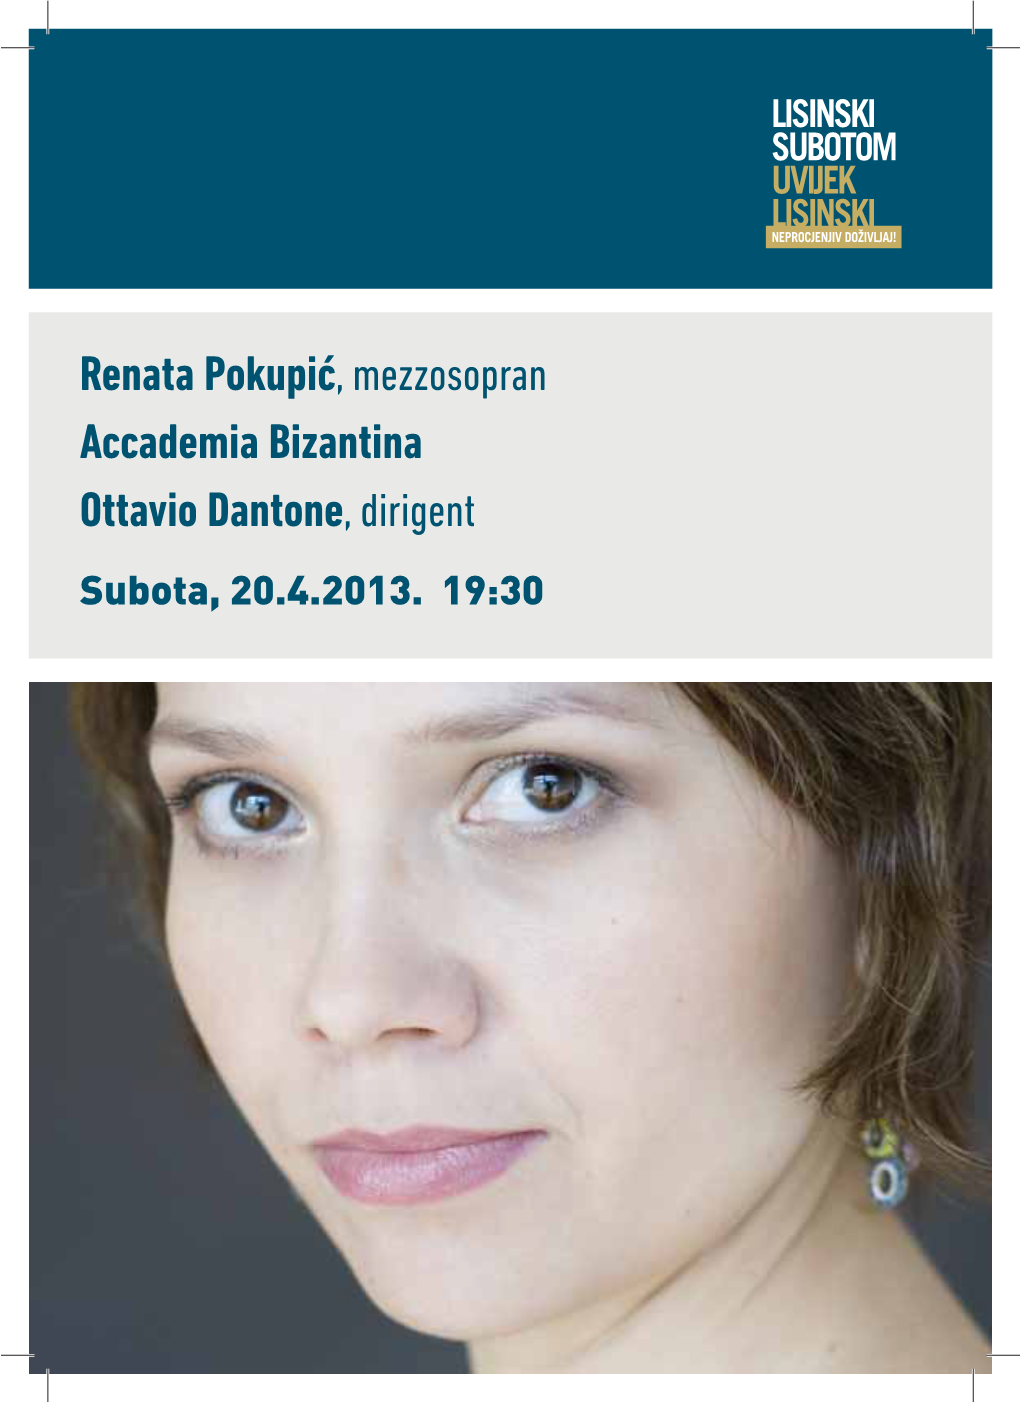 Renata Pokupić, Mezzosopran Accademia Bizantina Ottavio Dantone, Dirigent Subota, 20.4.2013